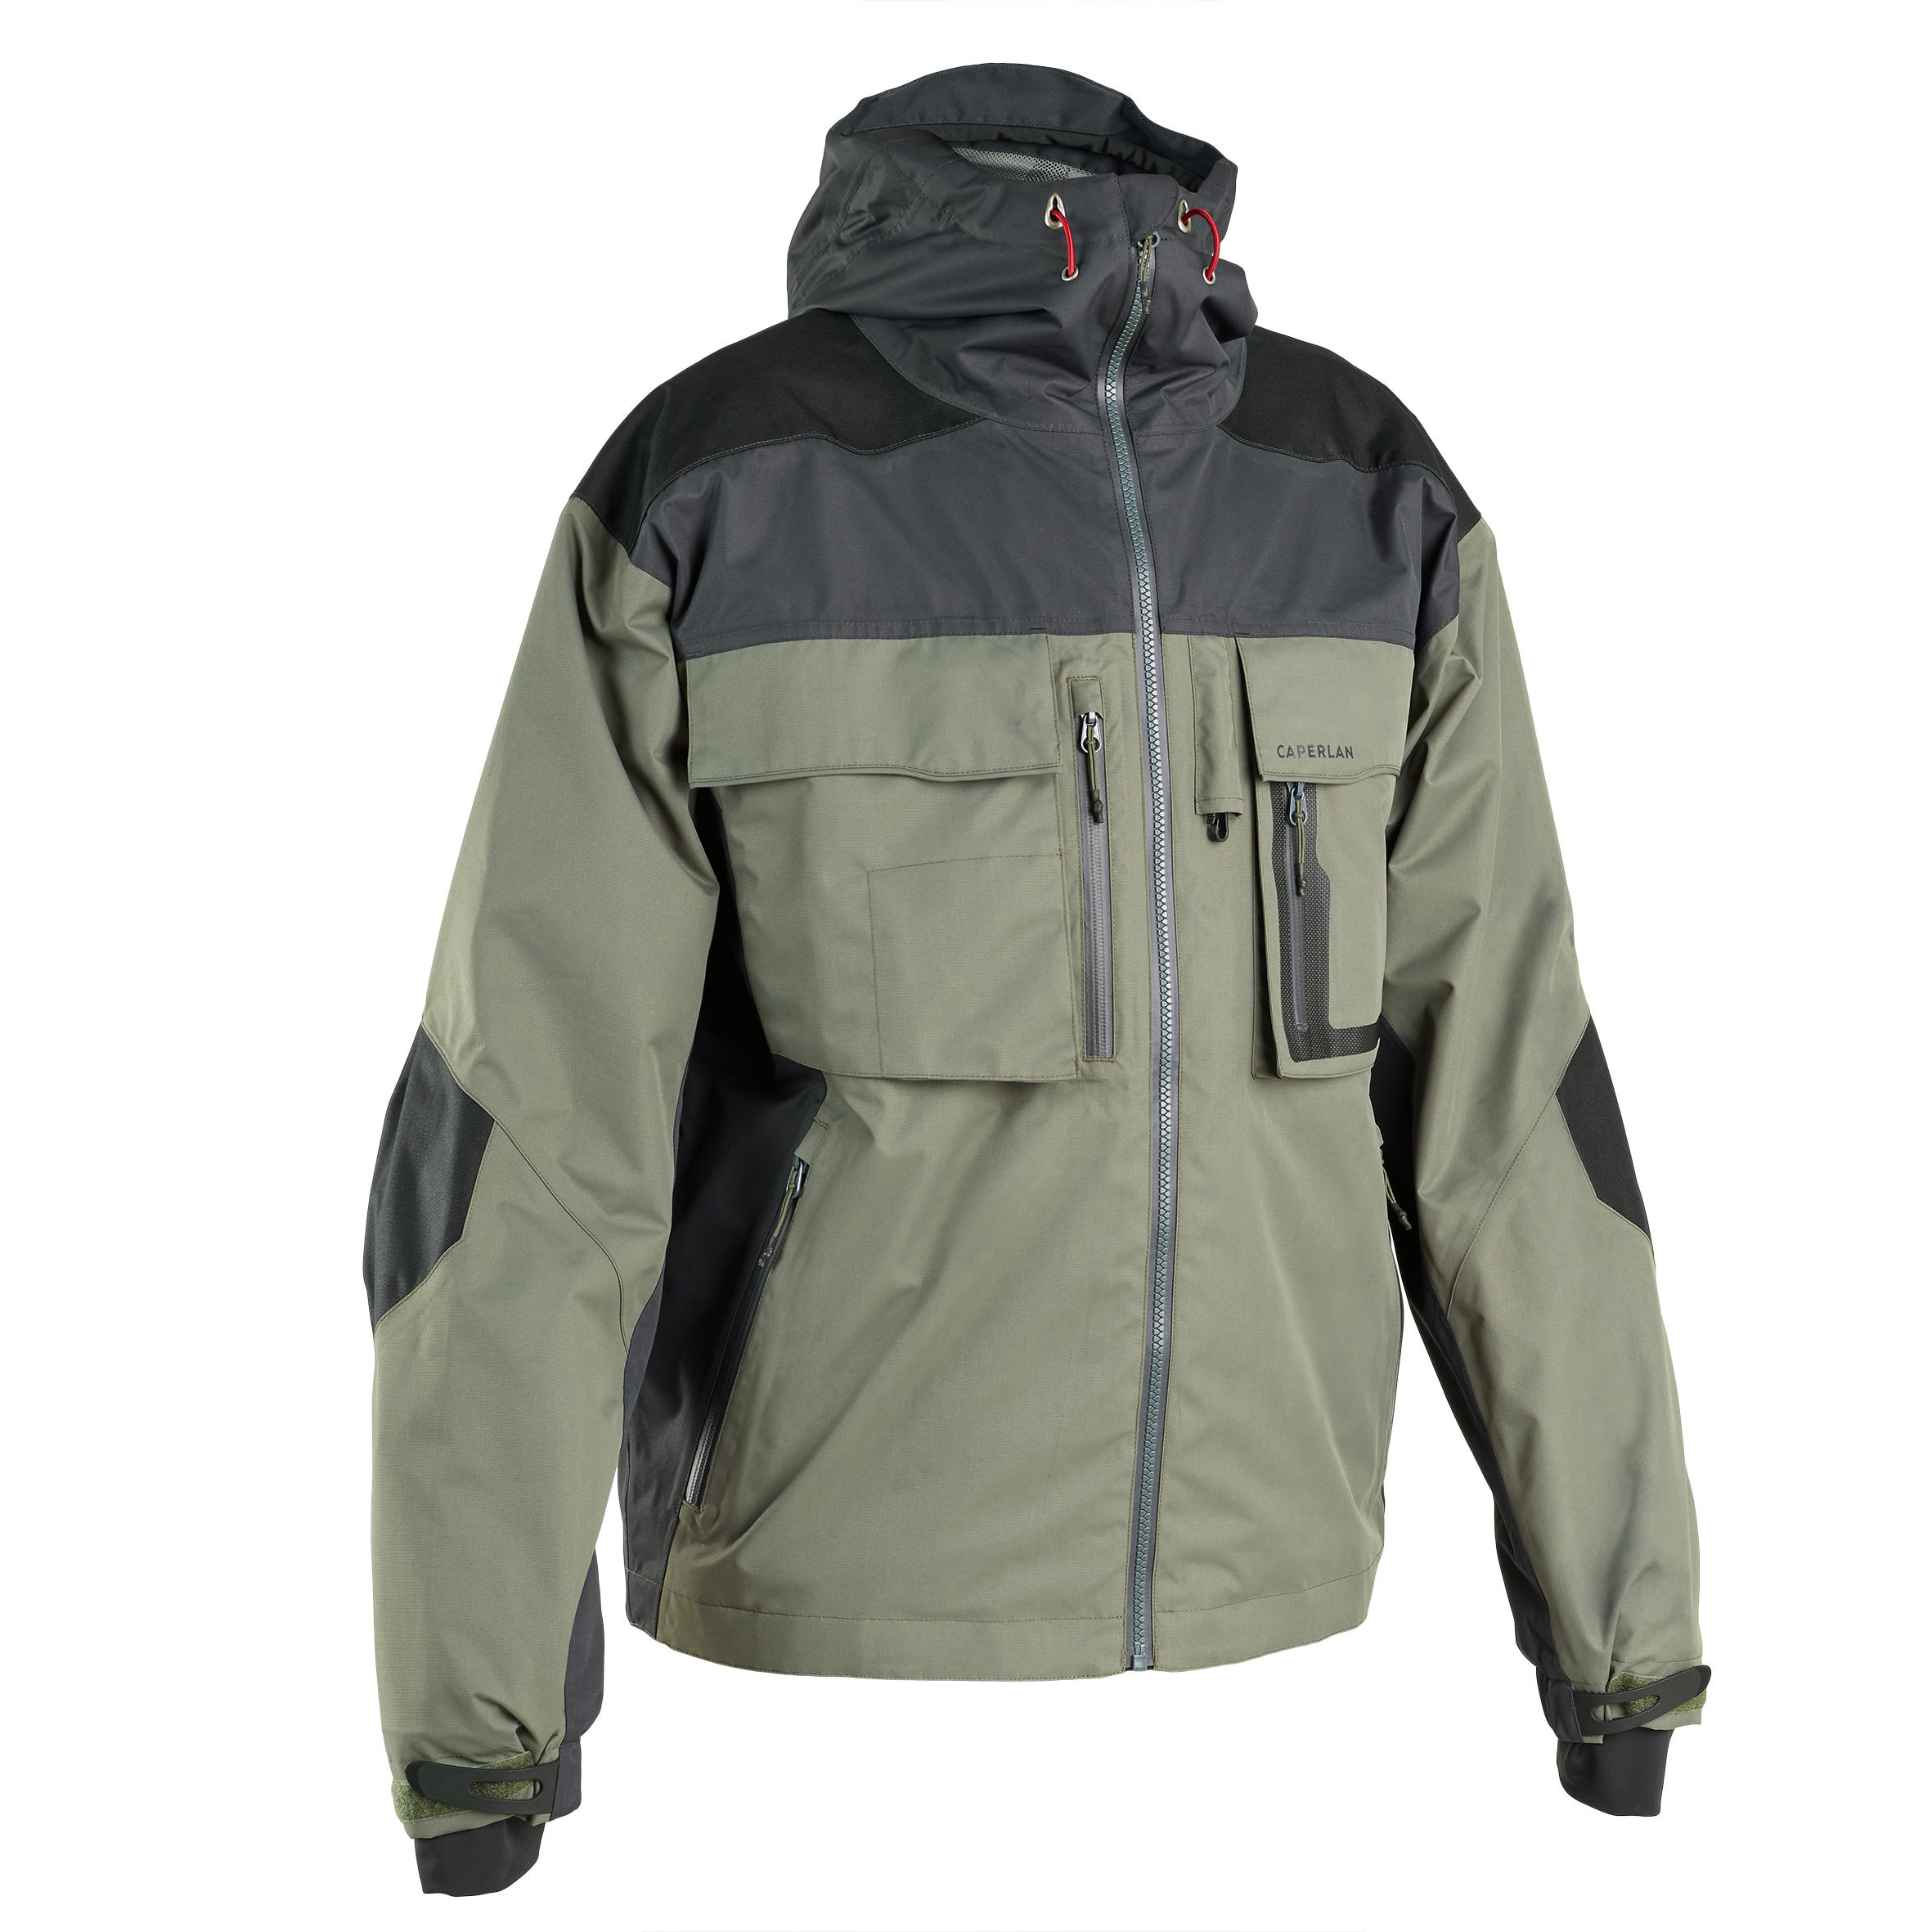 Fishing rain jacket 500 - Adults - Khaki brown, Carbon grey - Caperlan -  Decathlon